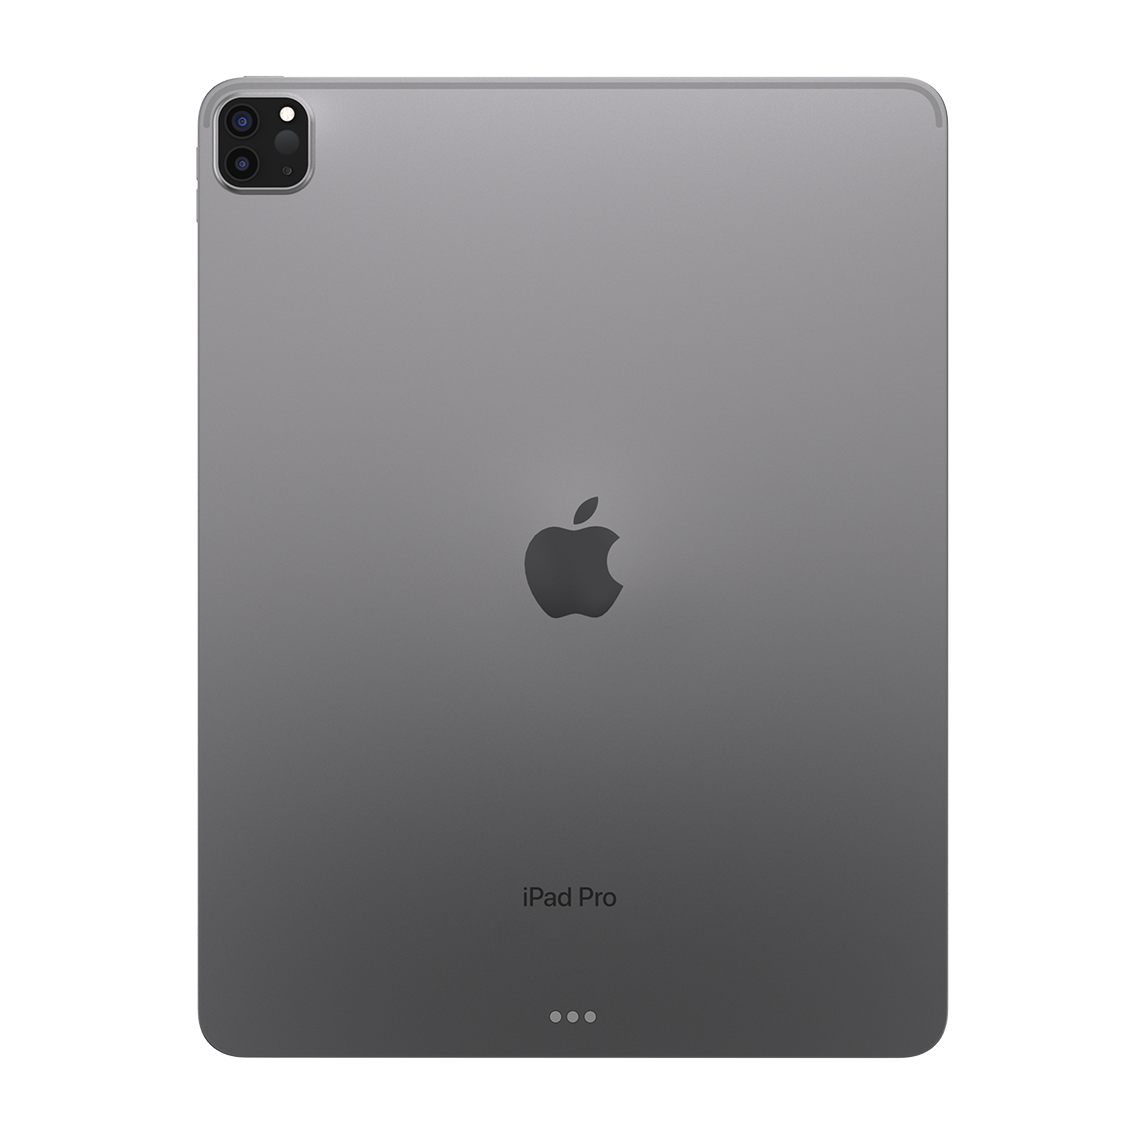 Apple iPad Pro 12.9-inch 6th Generation - Space Gray - 512GB, Wi-Fi, Open Box